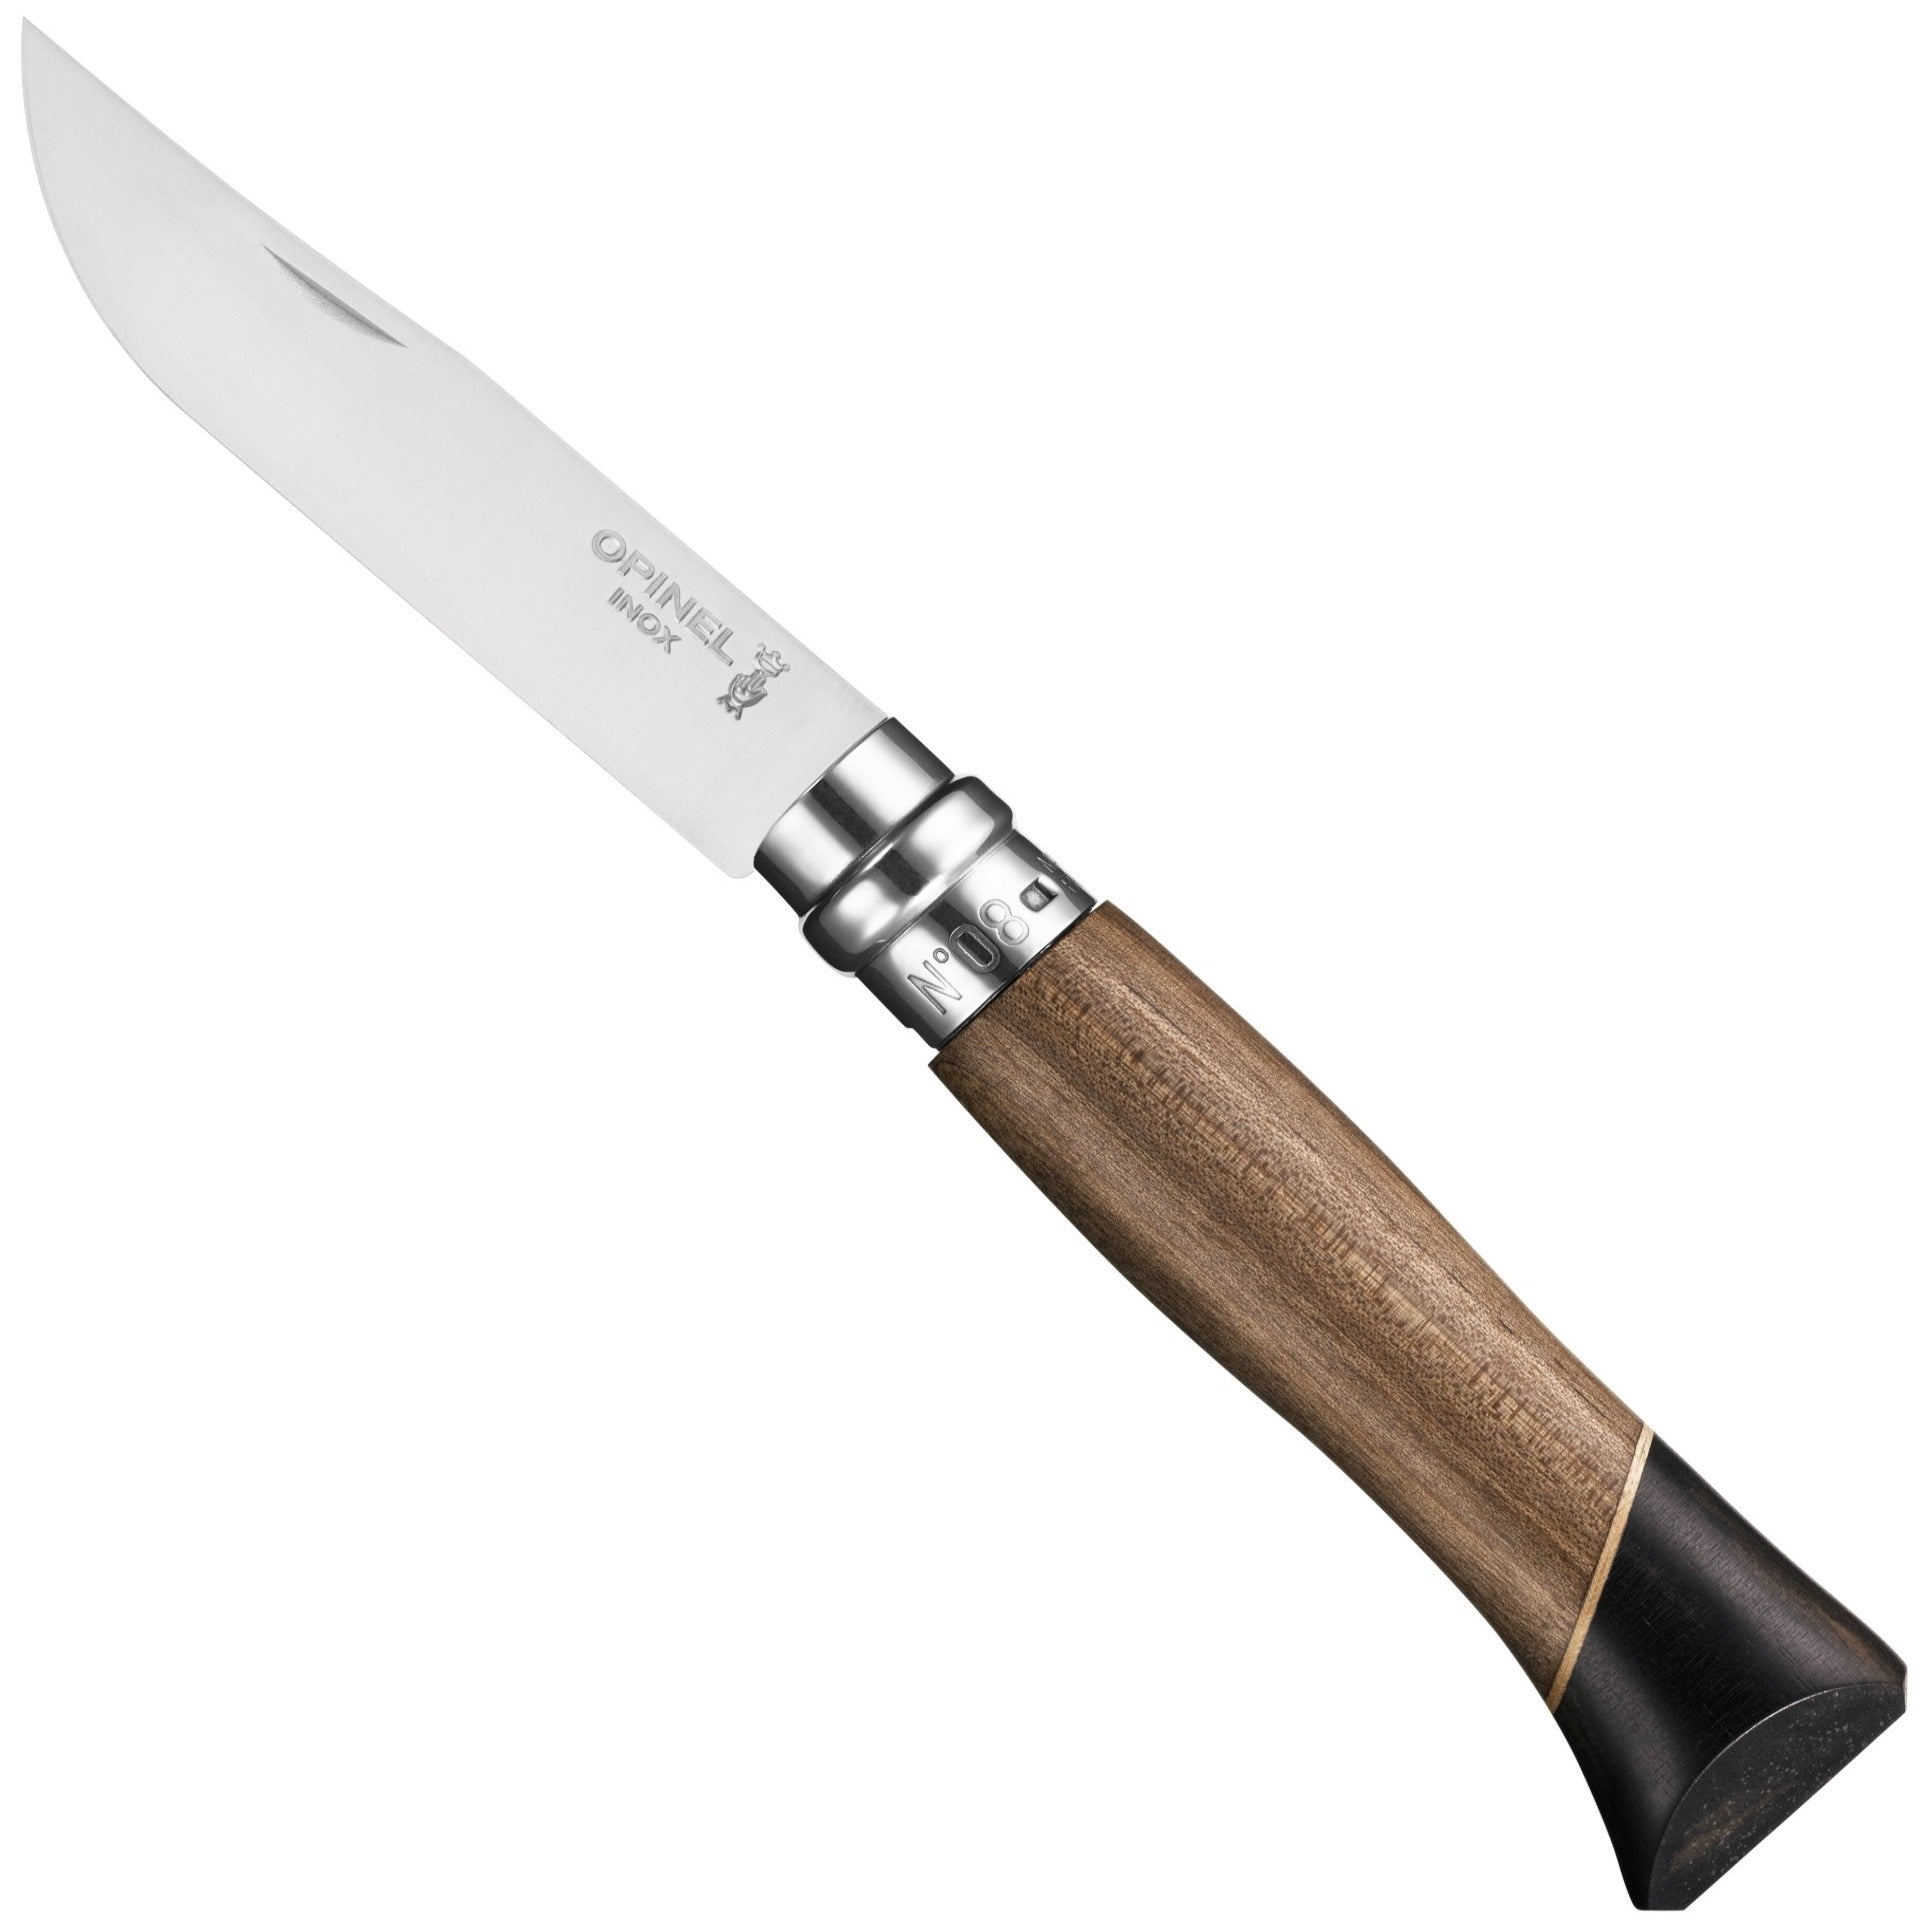 Opinel  No.09 DIY Folding Utility Knife - OPINEL USA